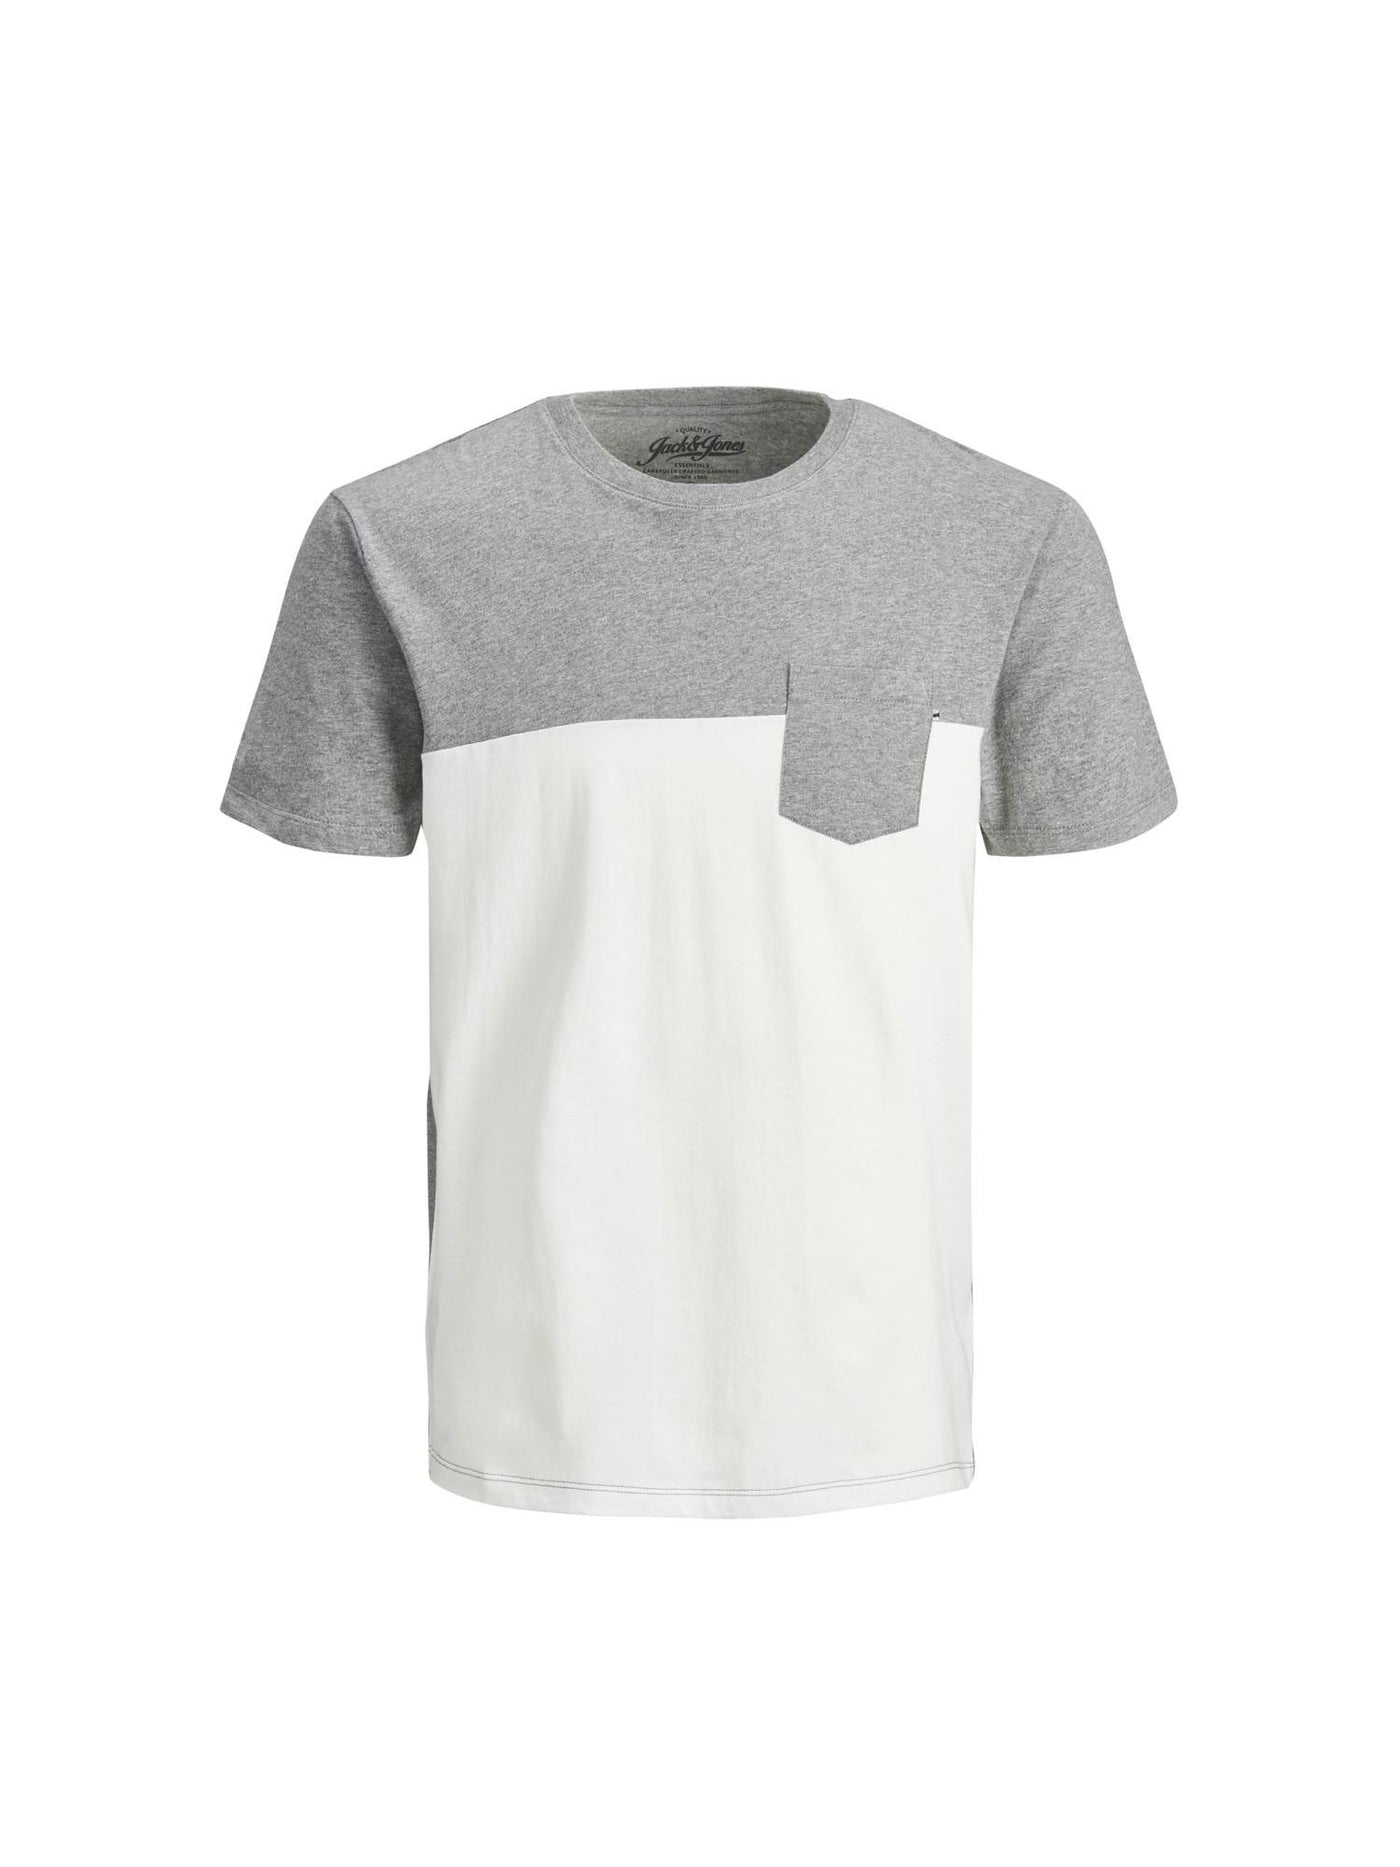 Jack&Jones Mens Gray Printed Short Sleeve Classic T-Shirt S